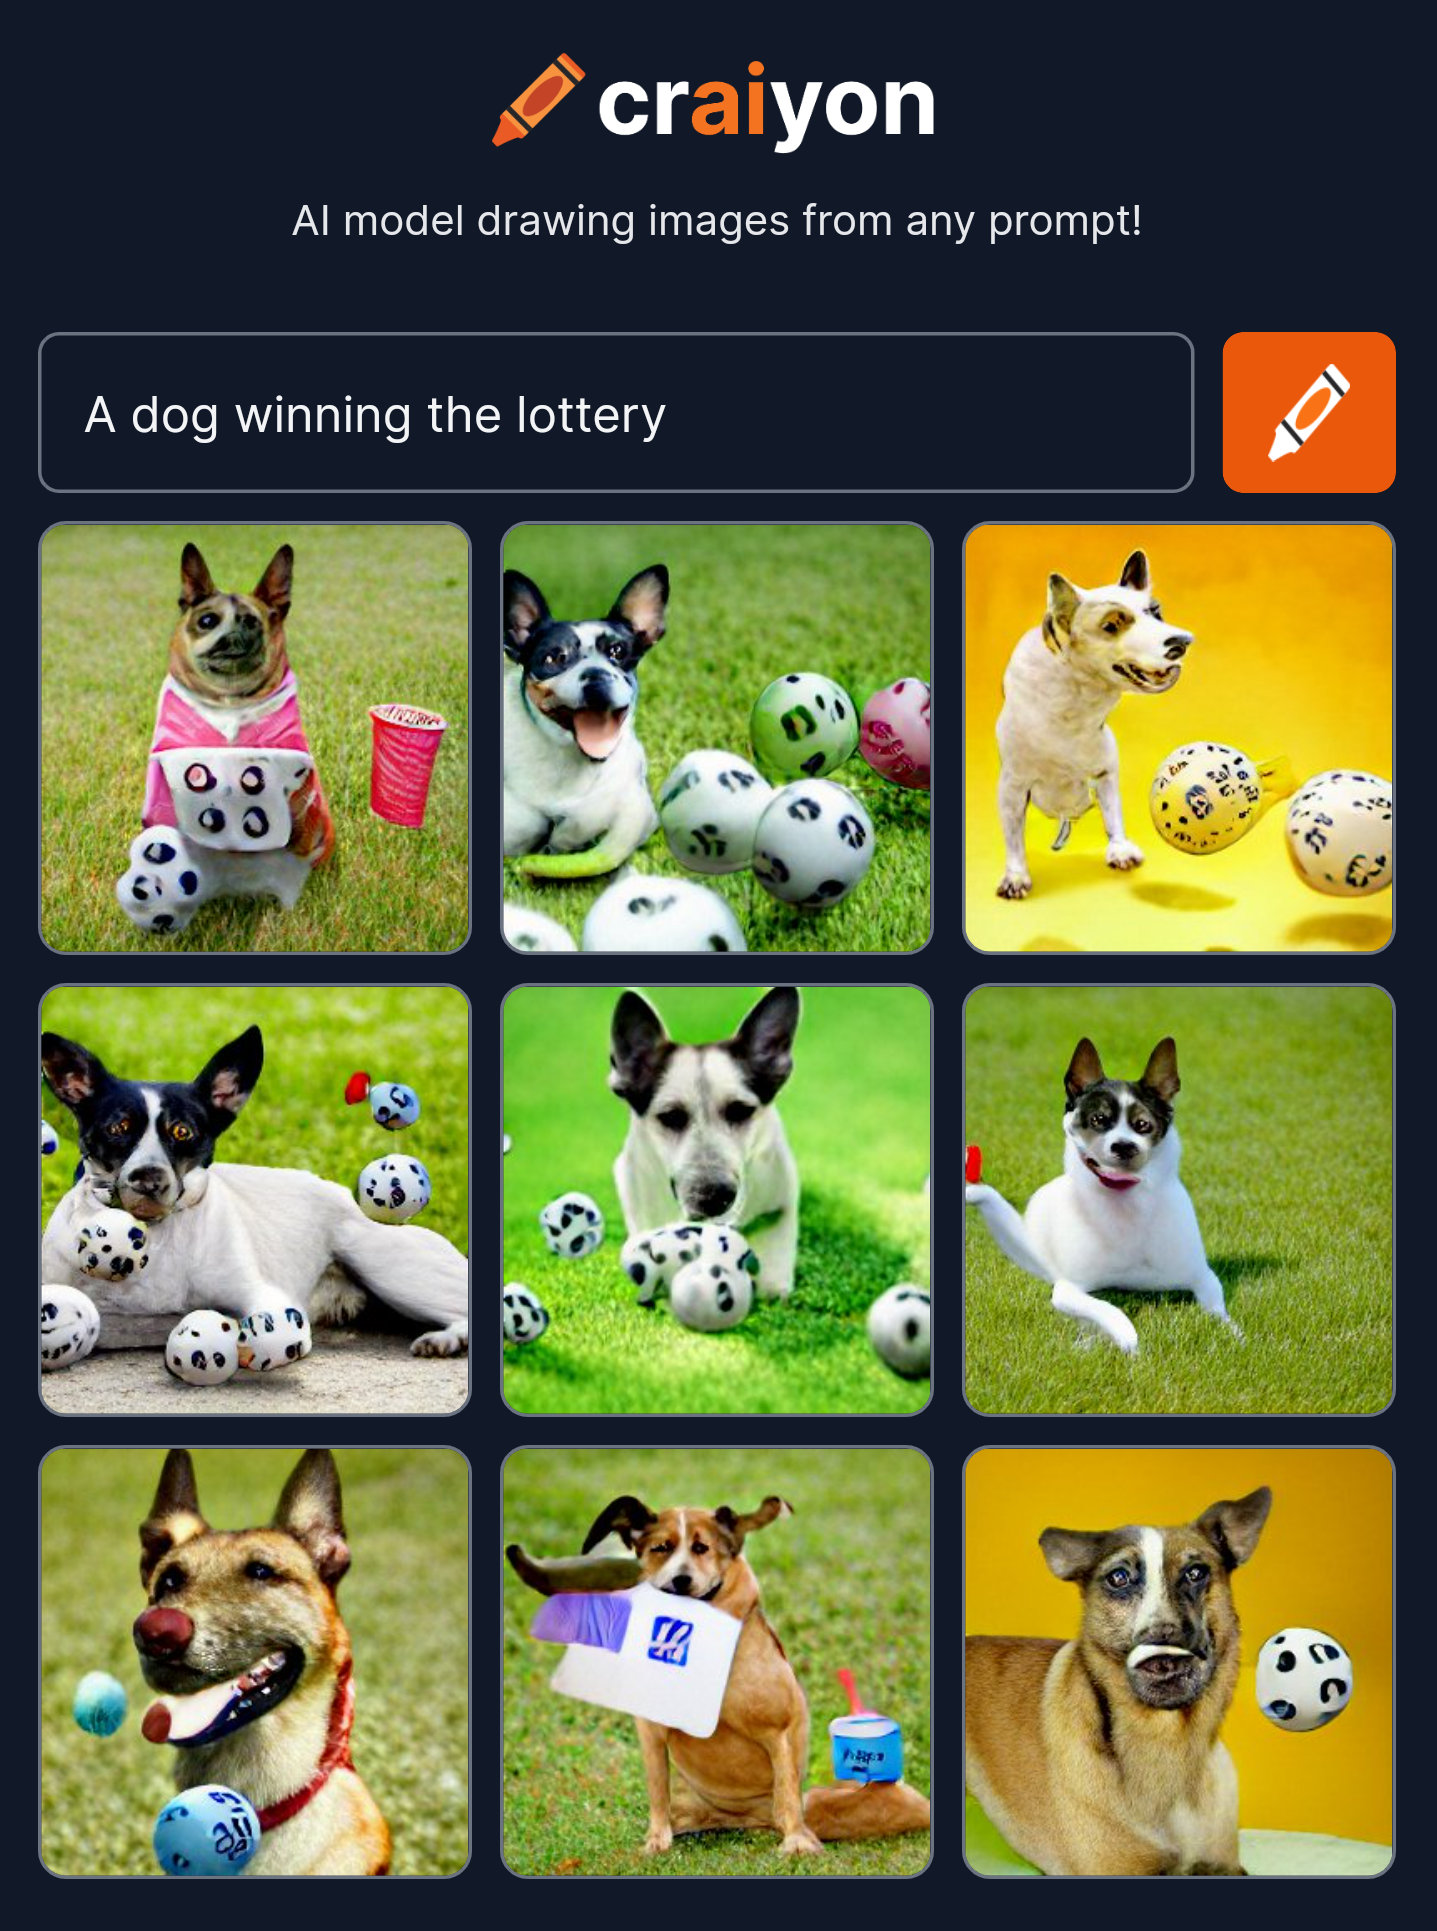 craiyon_165515_A_dog_winning_the_lottery.jpg.png